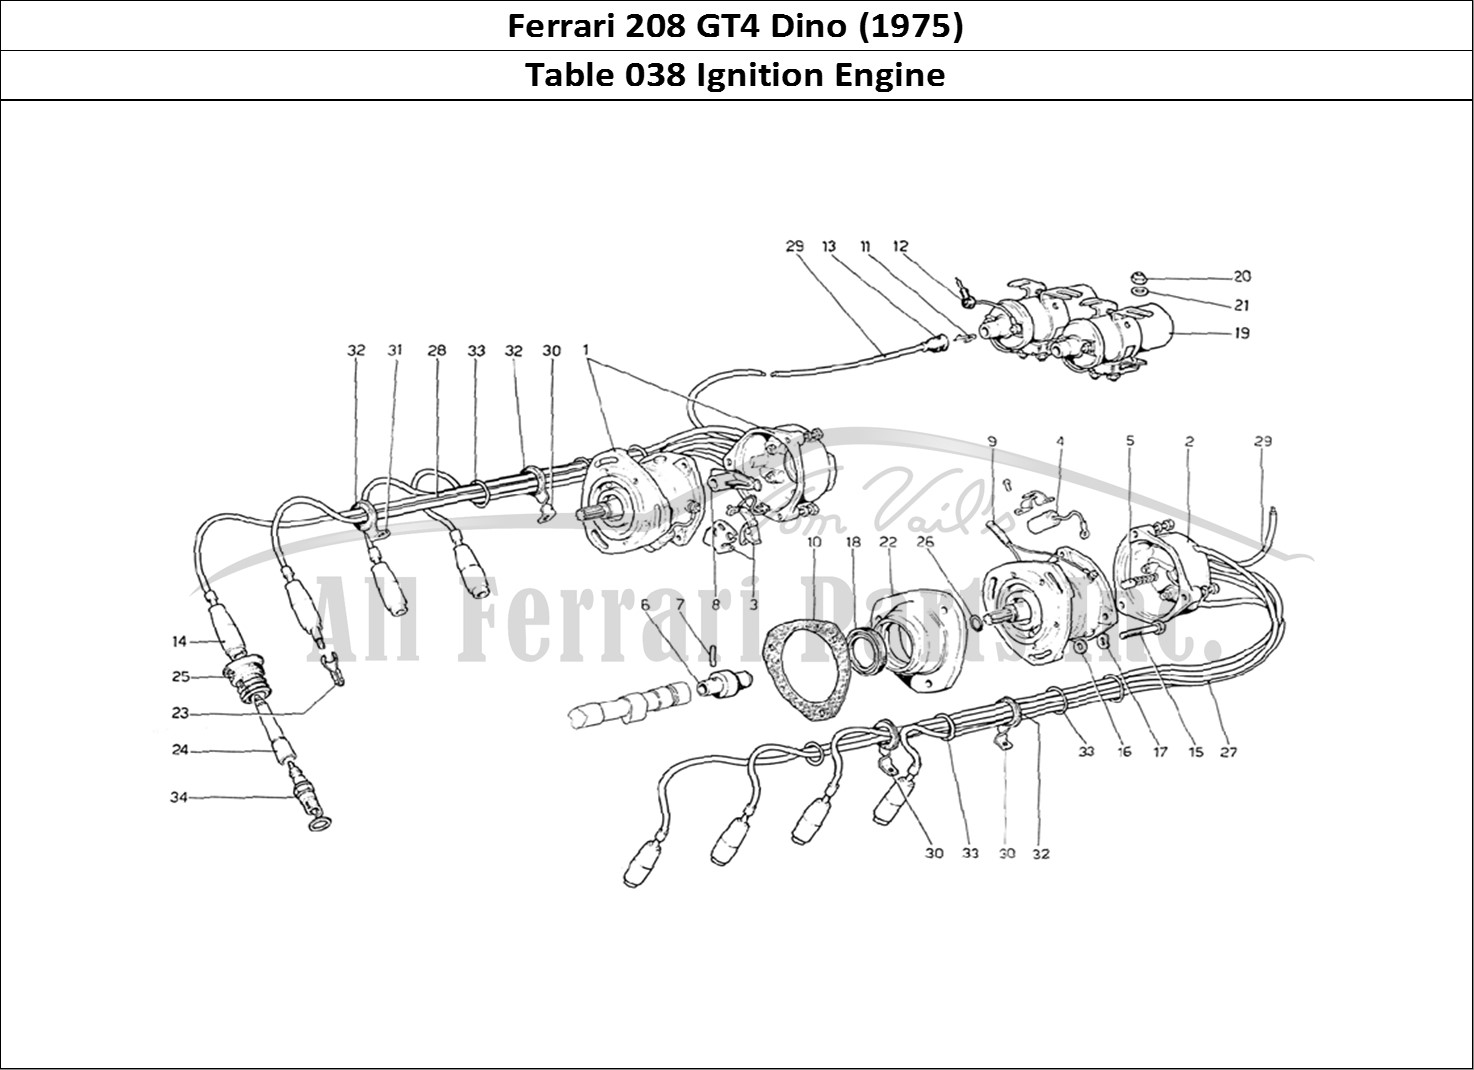 Ferrari Parts Ferrari 208 GT4 Dino (1975) Page 038 Engine Ignition